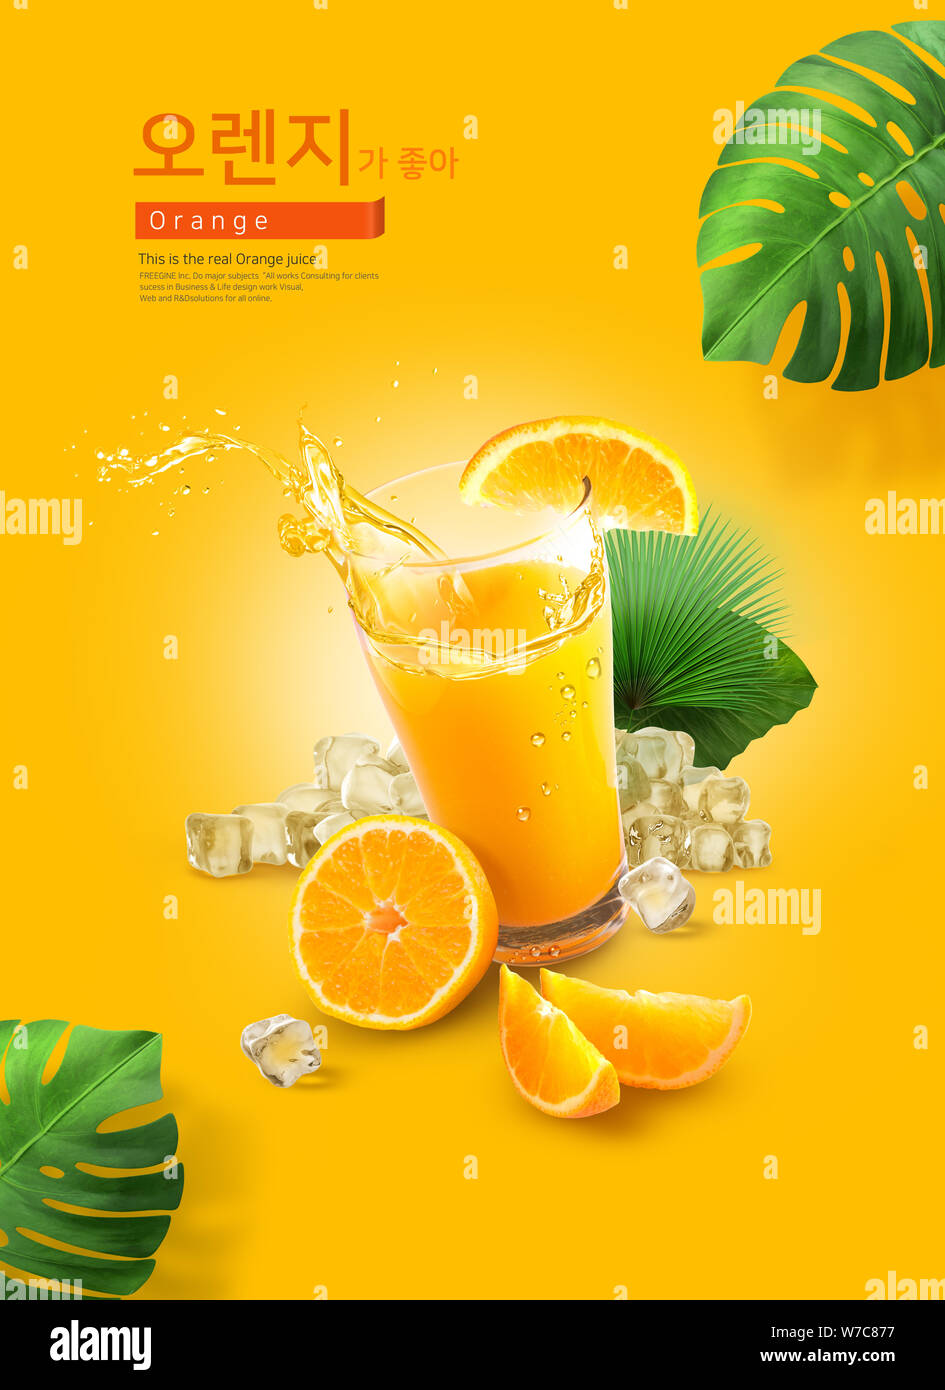 Fresh juice poster 007 Stock Photo: 262728011 - Alamy